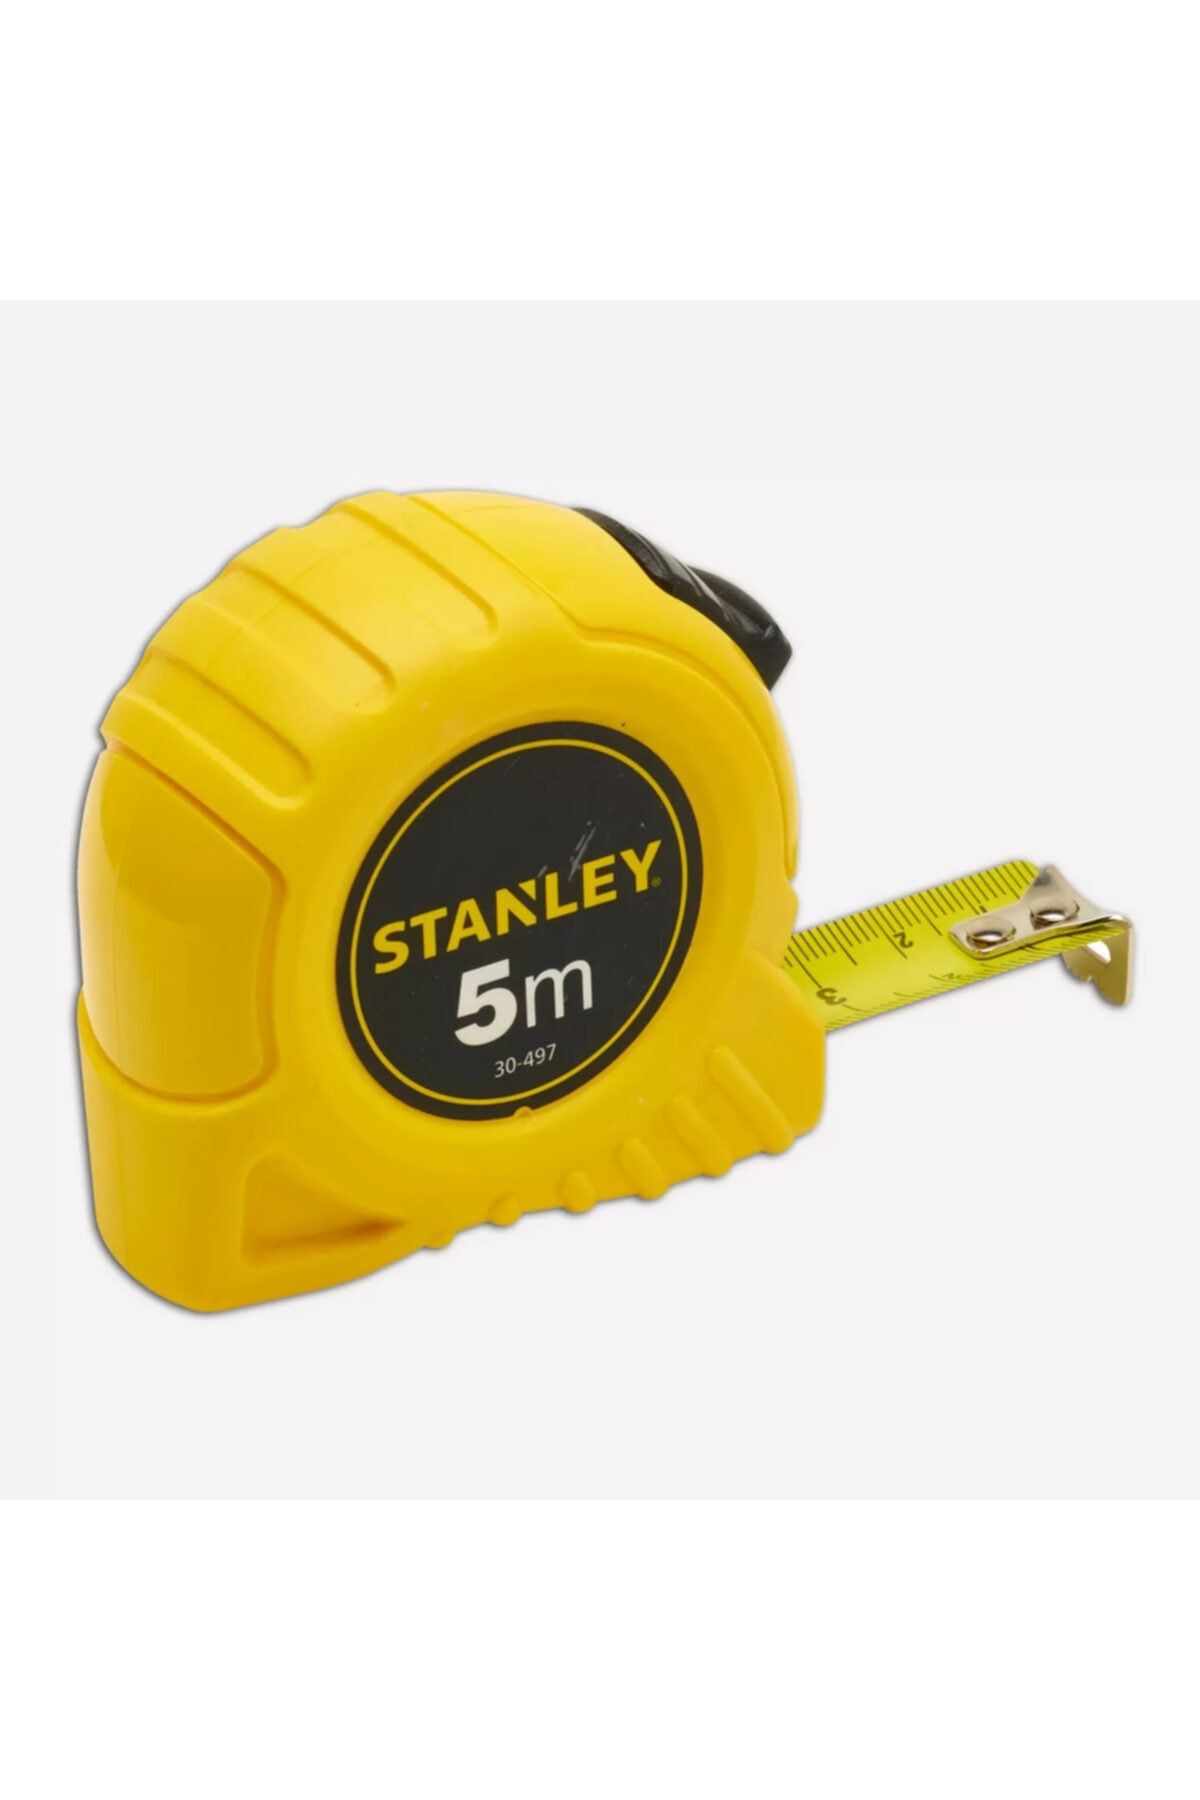 Stanley St130497 Metre 5m